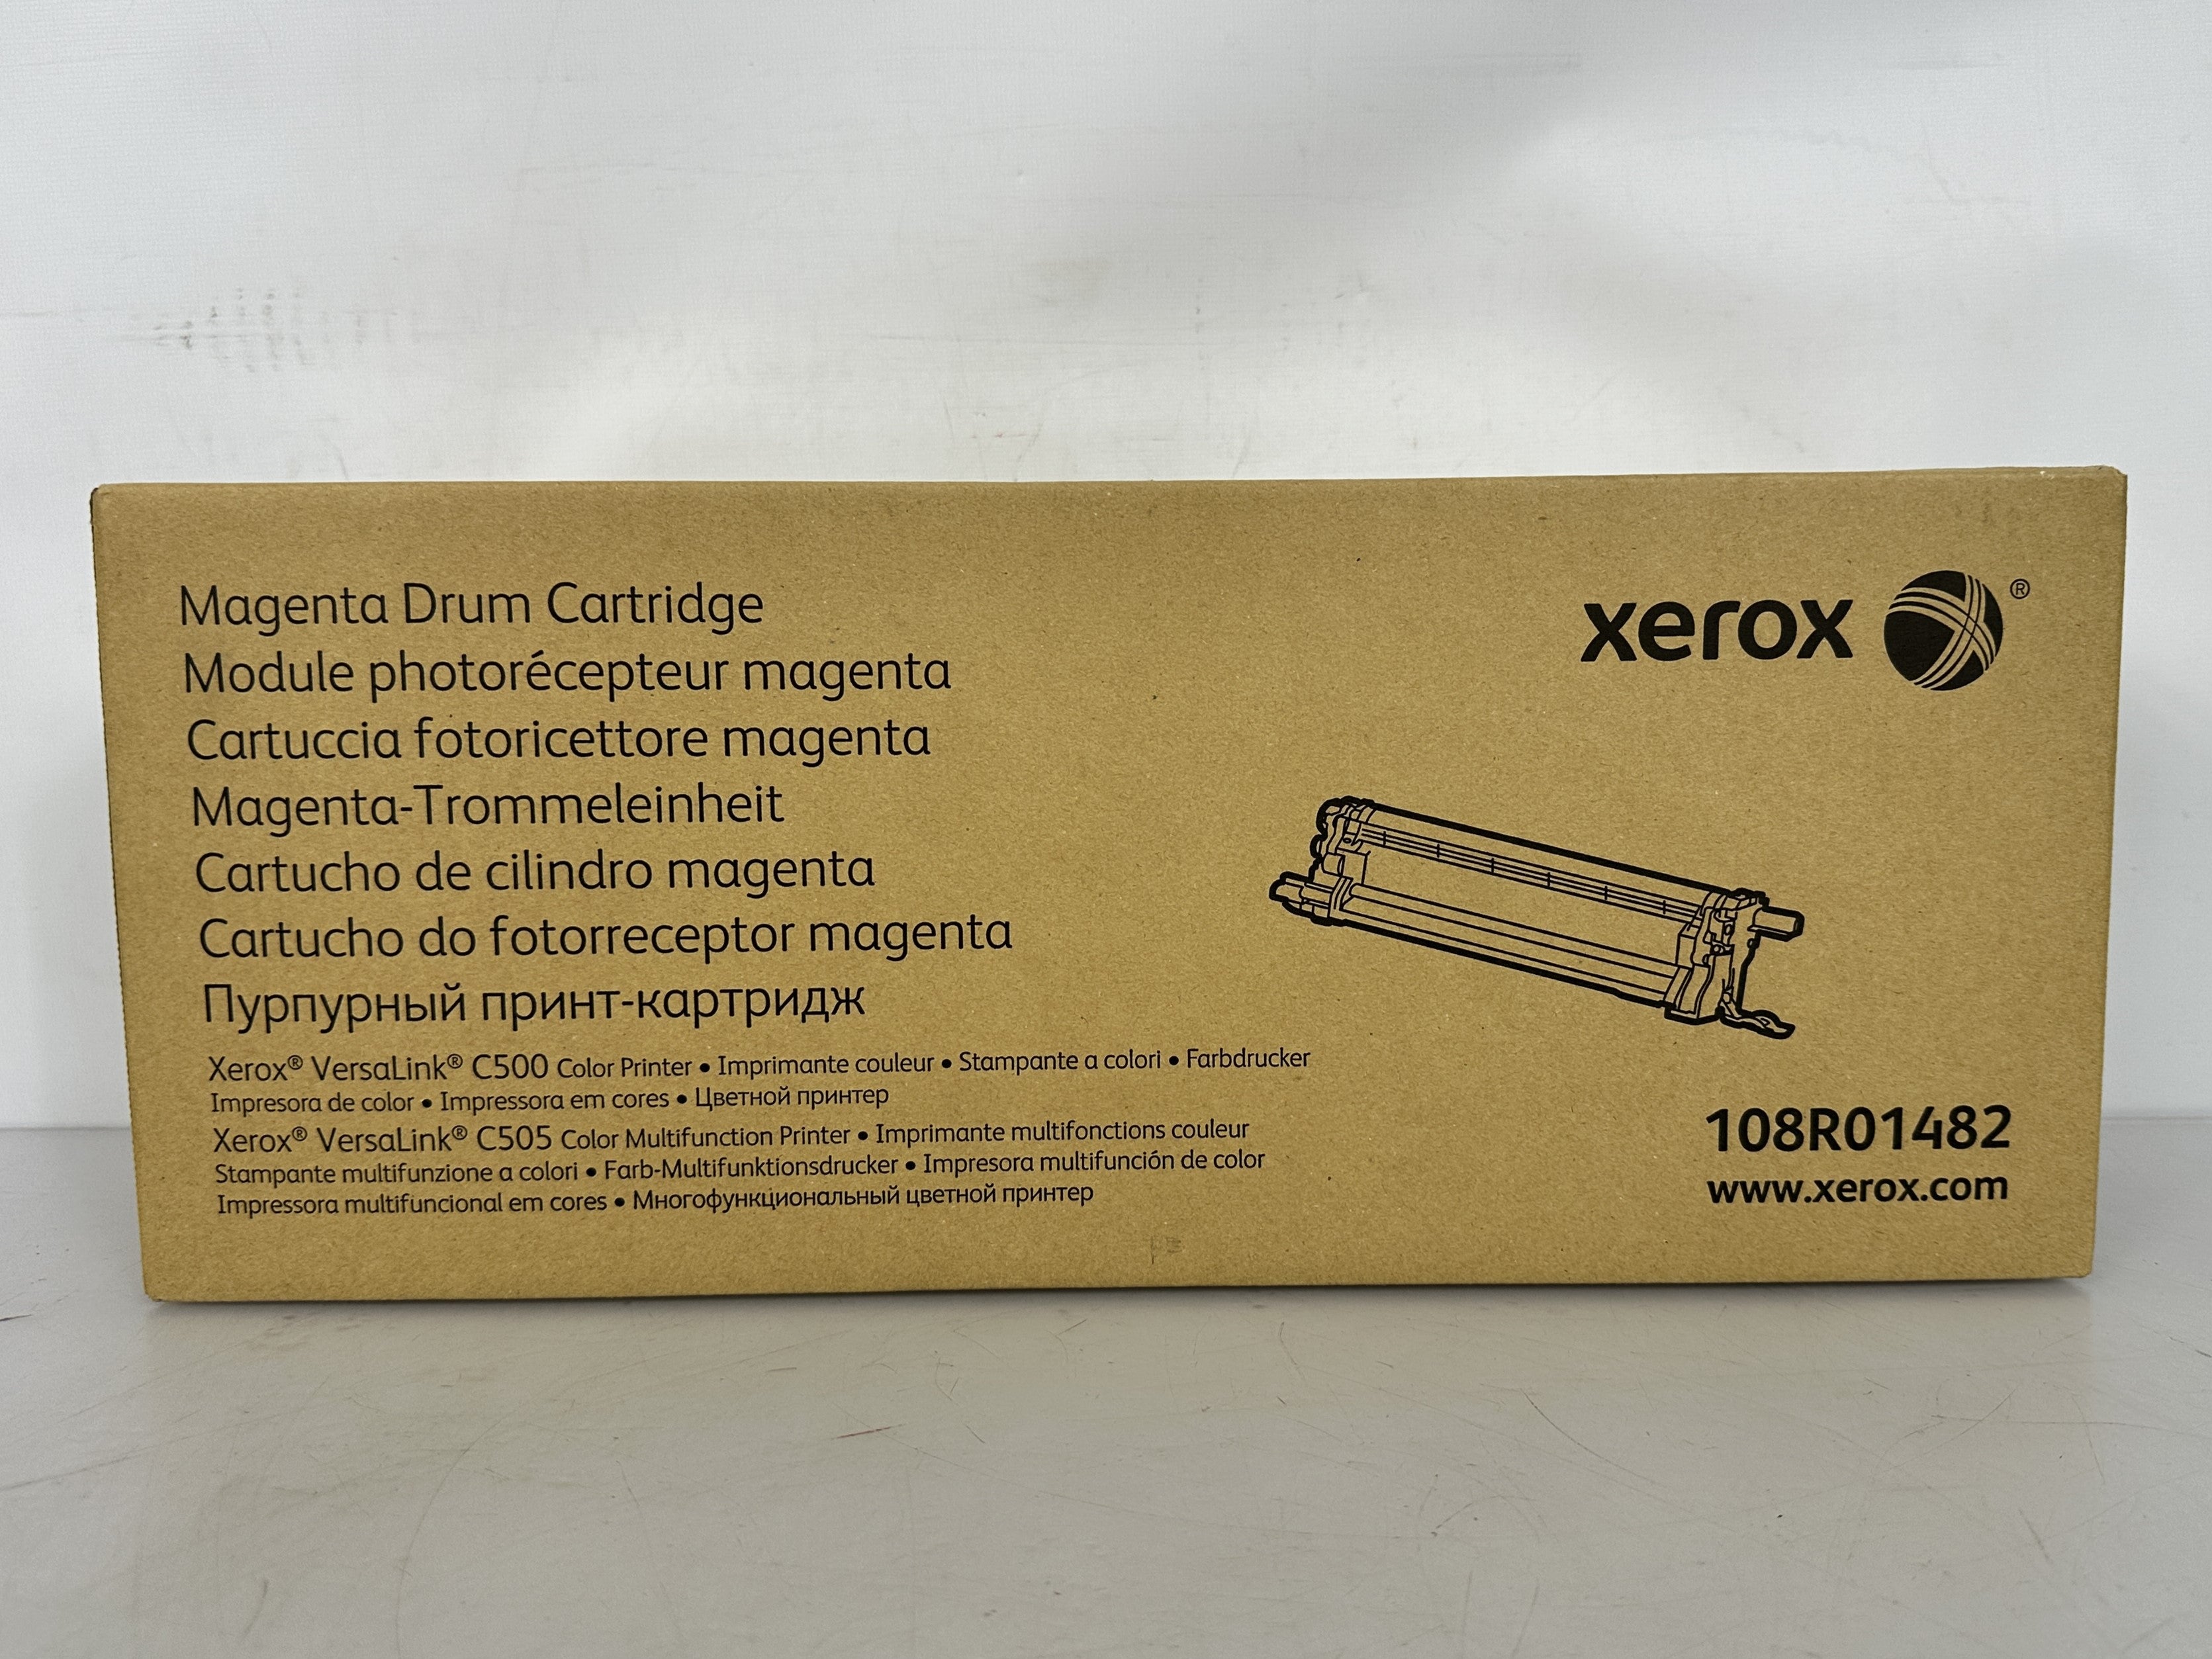 Xerox 108R01482 Magenta Drum Cartridge